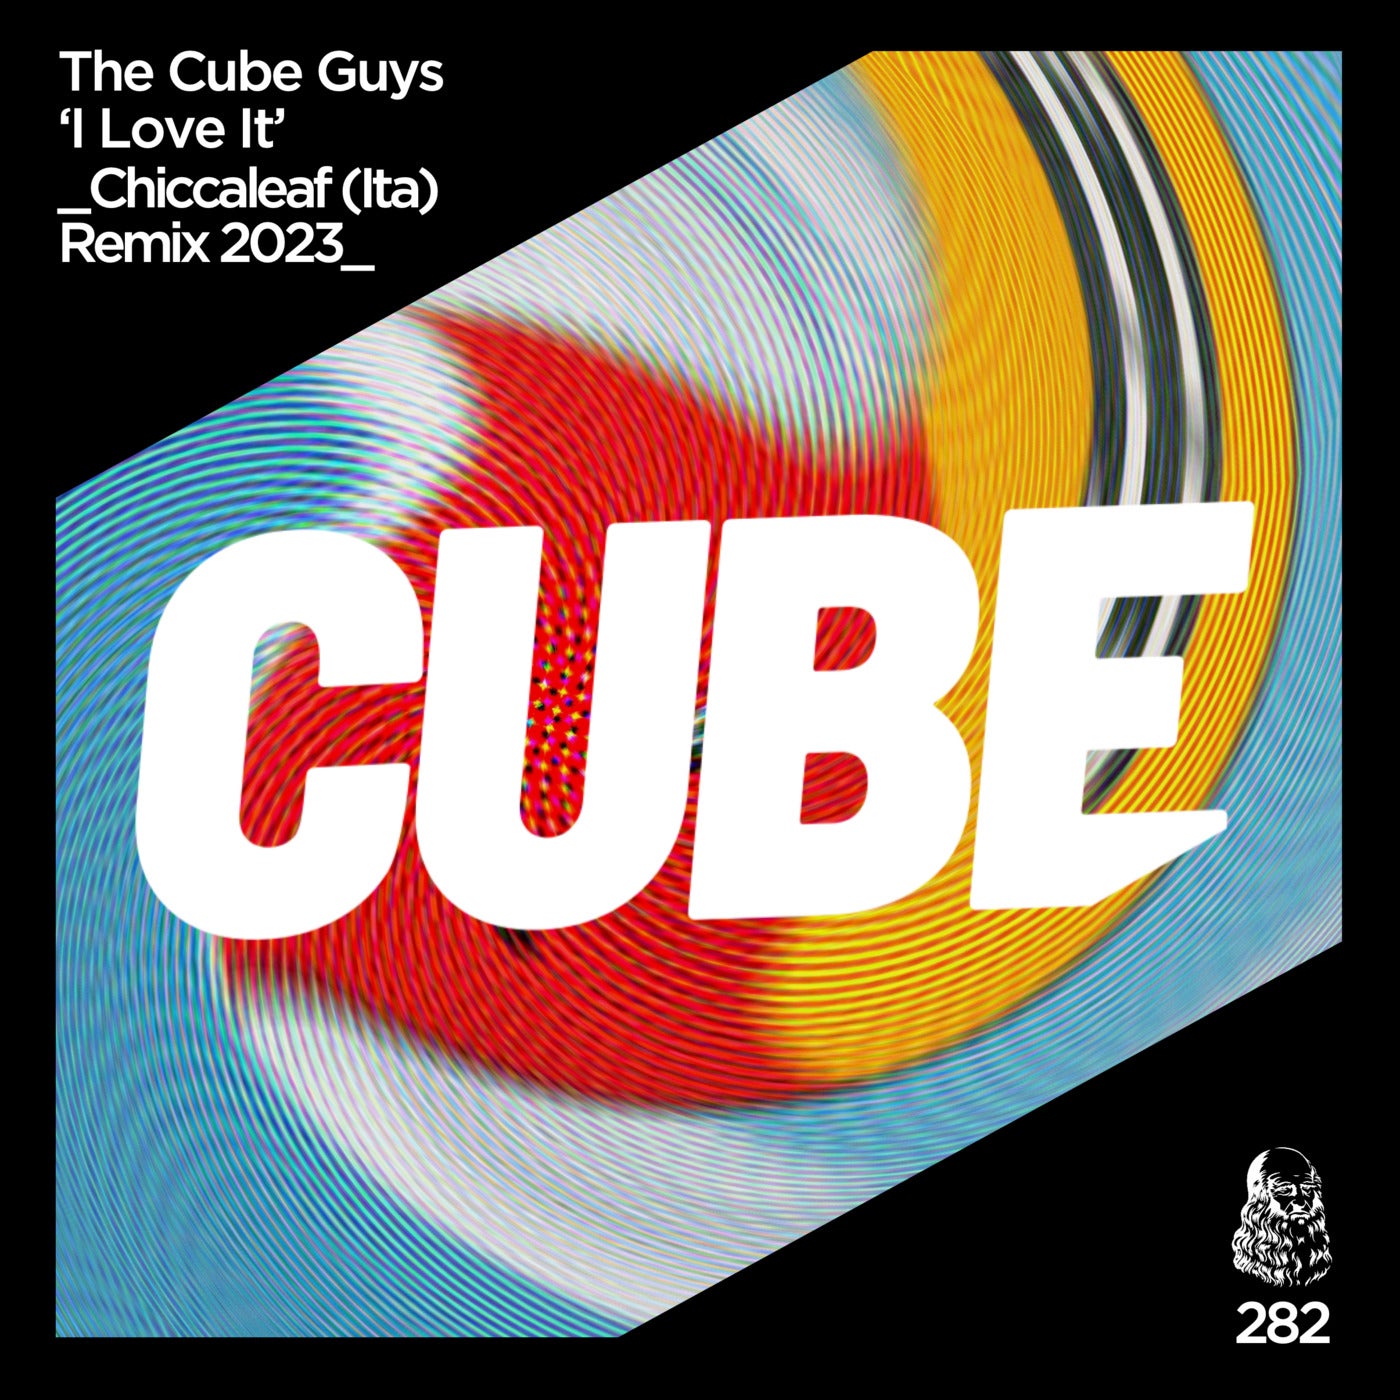 Cube remix. Label кубики.